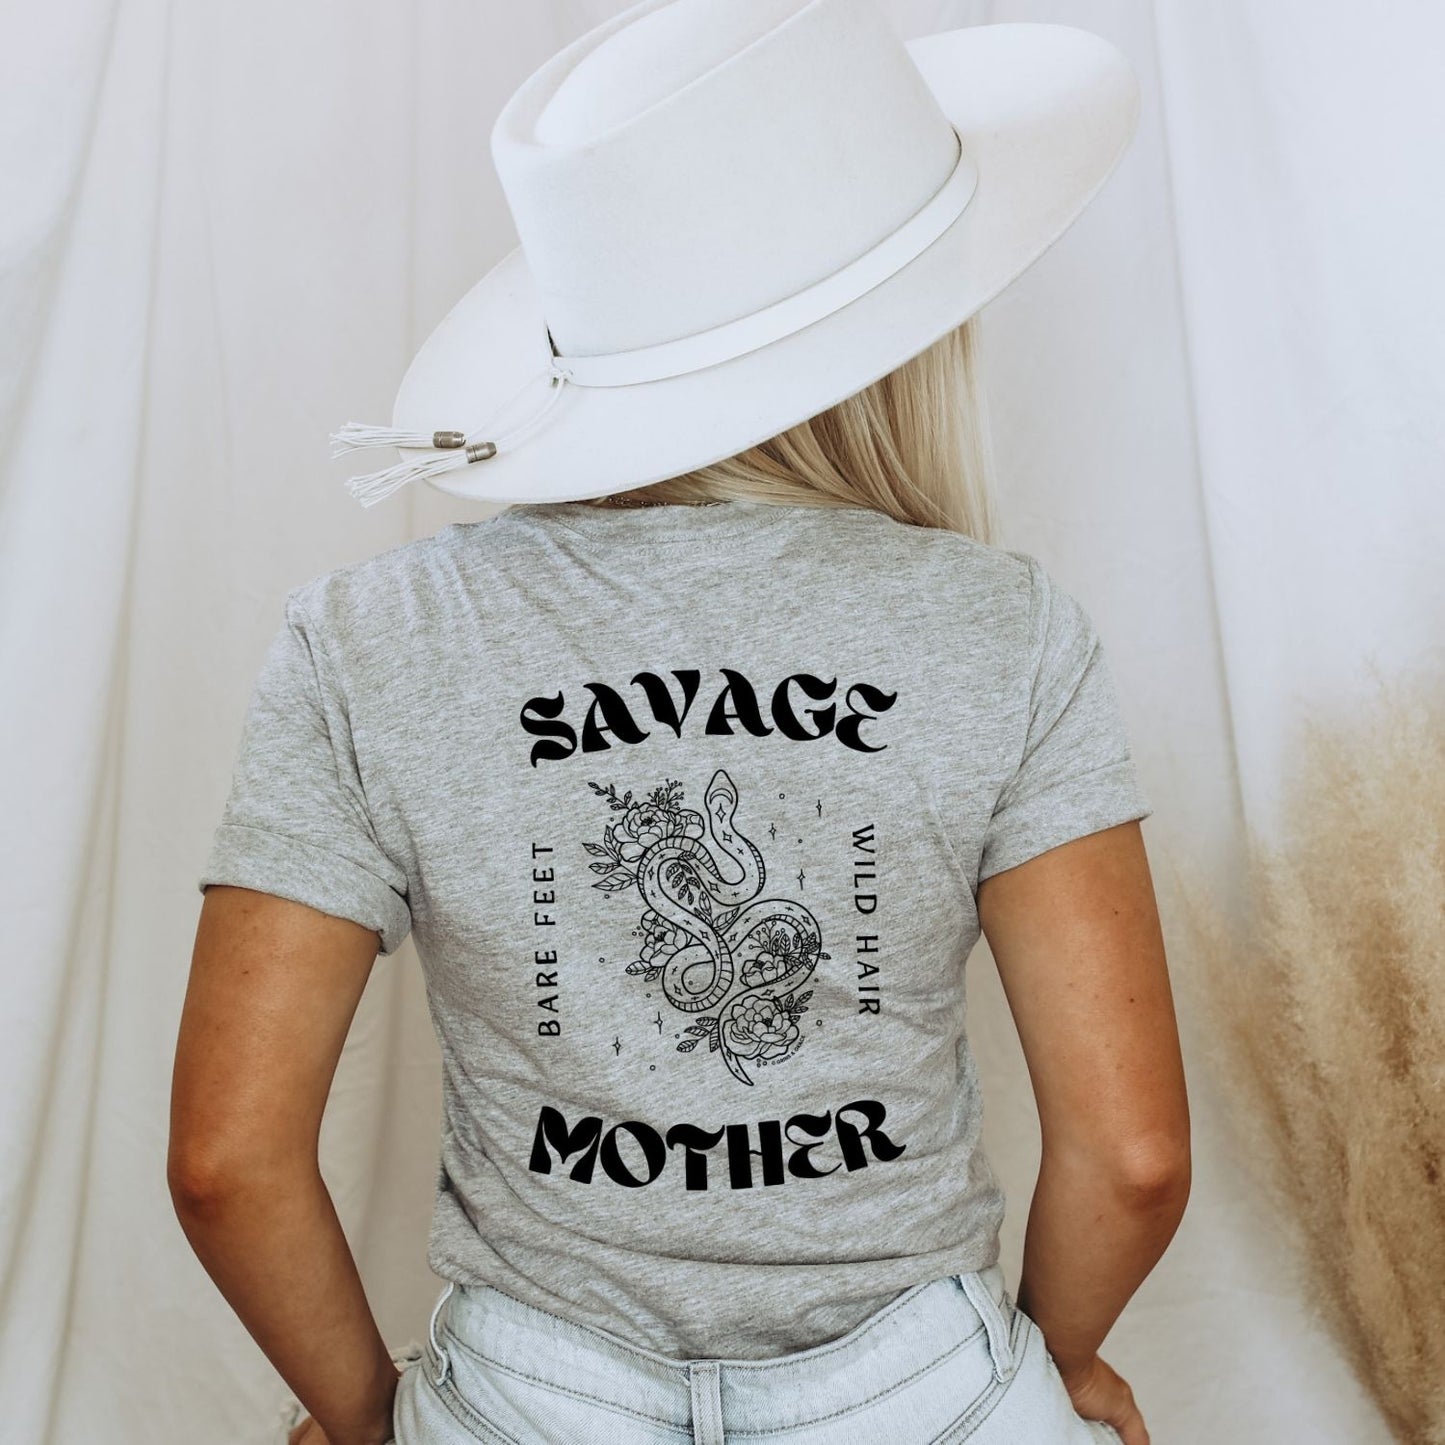 "SAVAGE MOTHER" MOM T-SHIRT